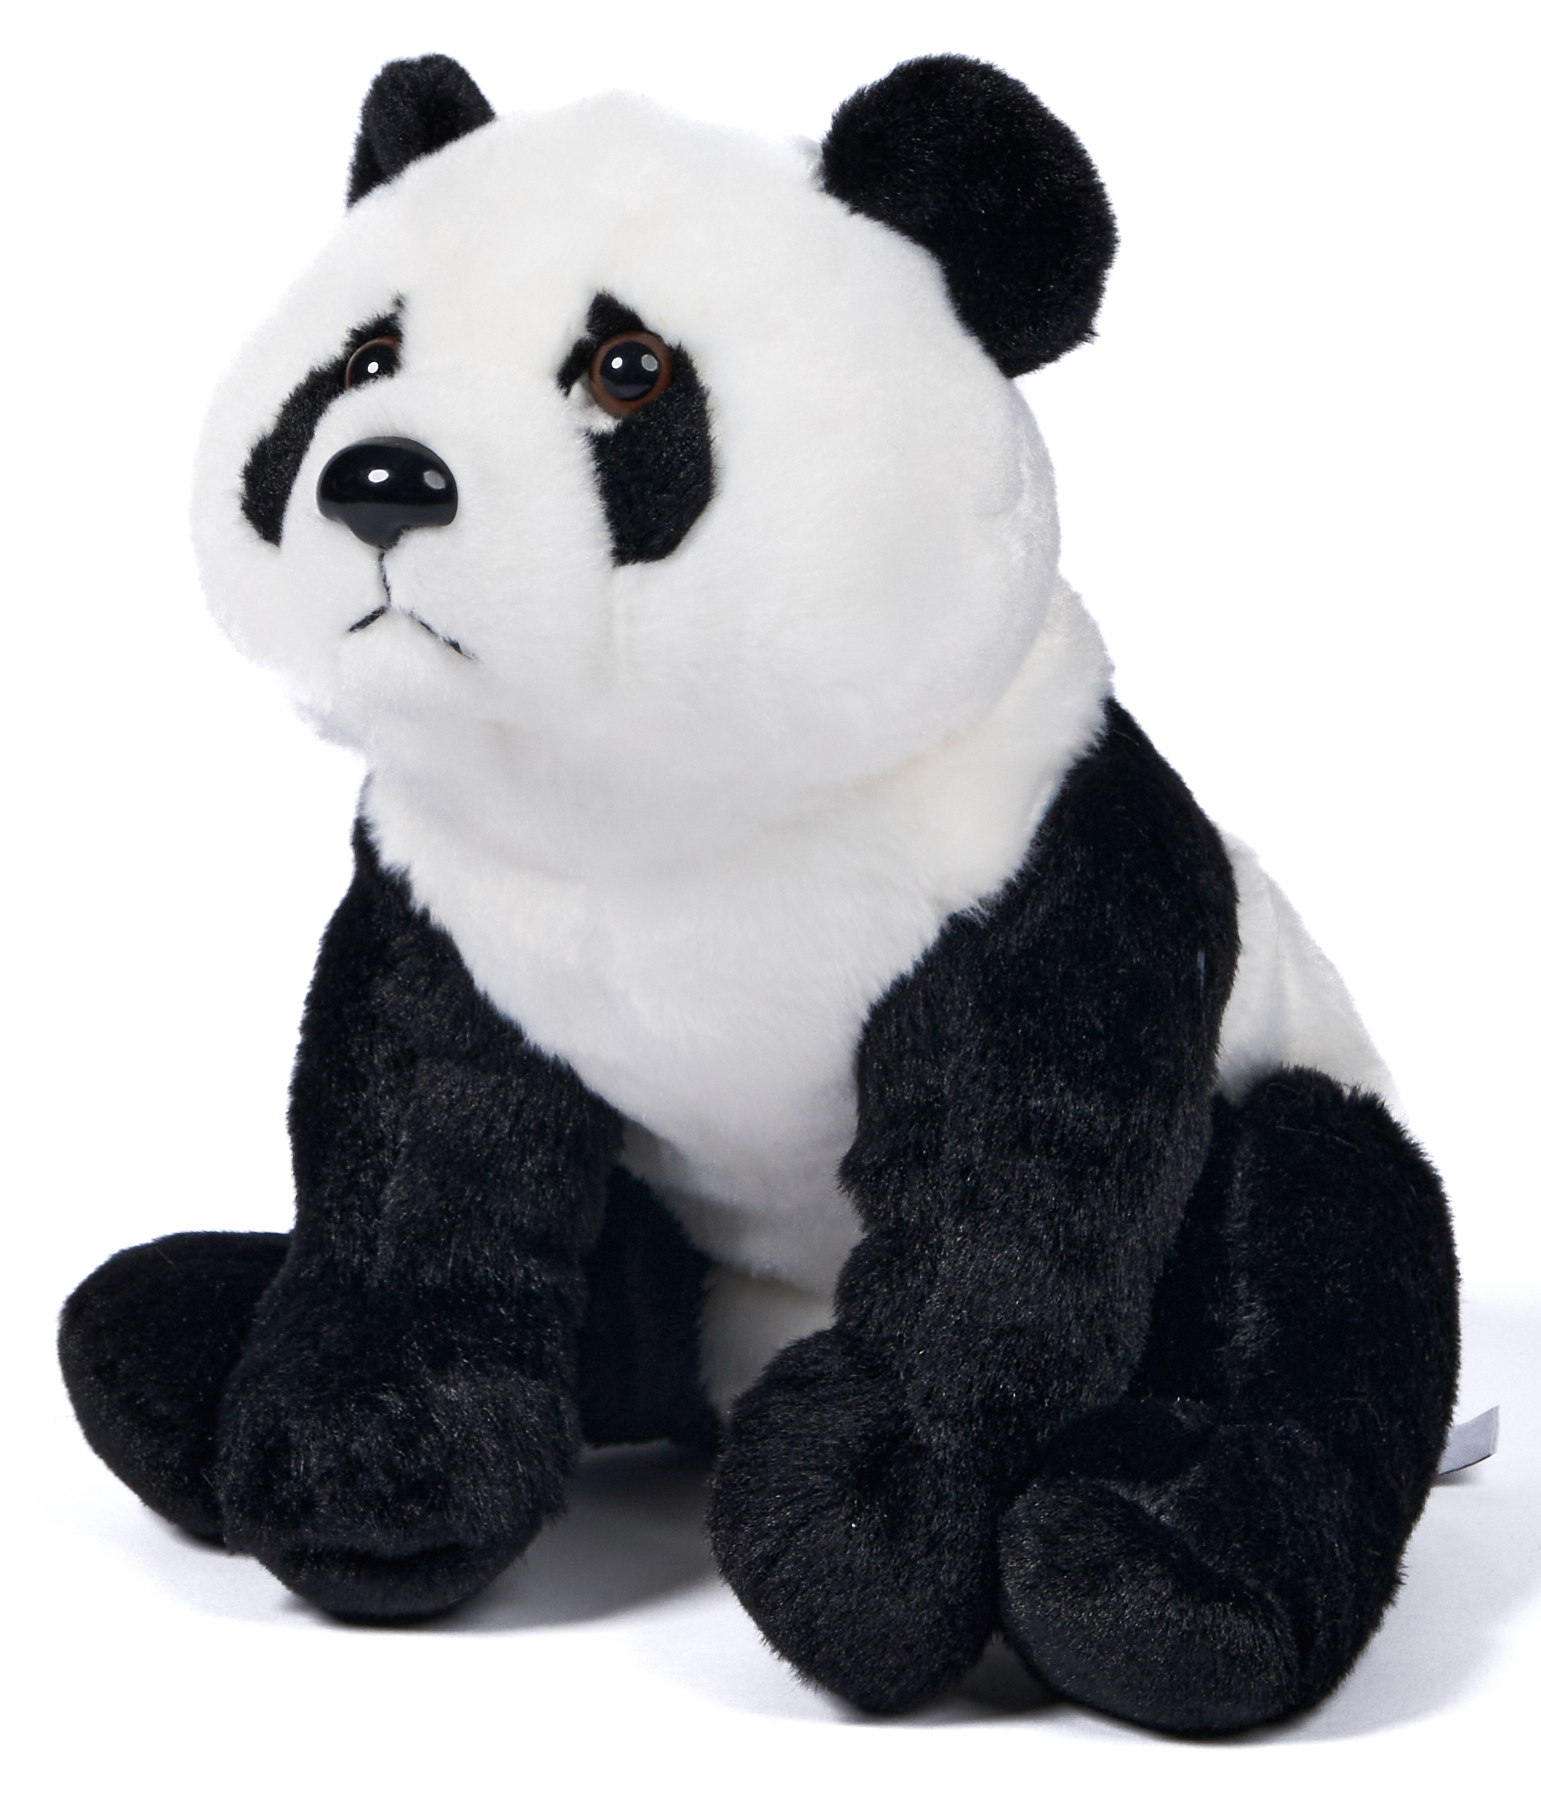 Panda bear, sitting - 24 cm (height)